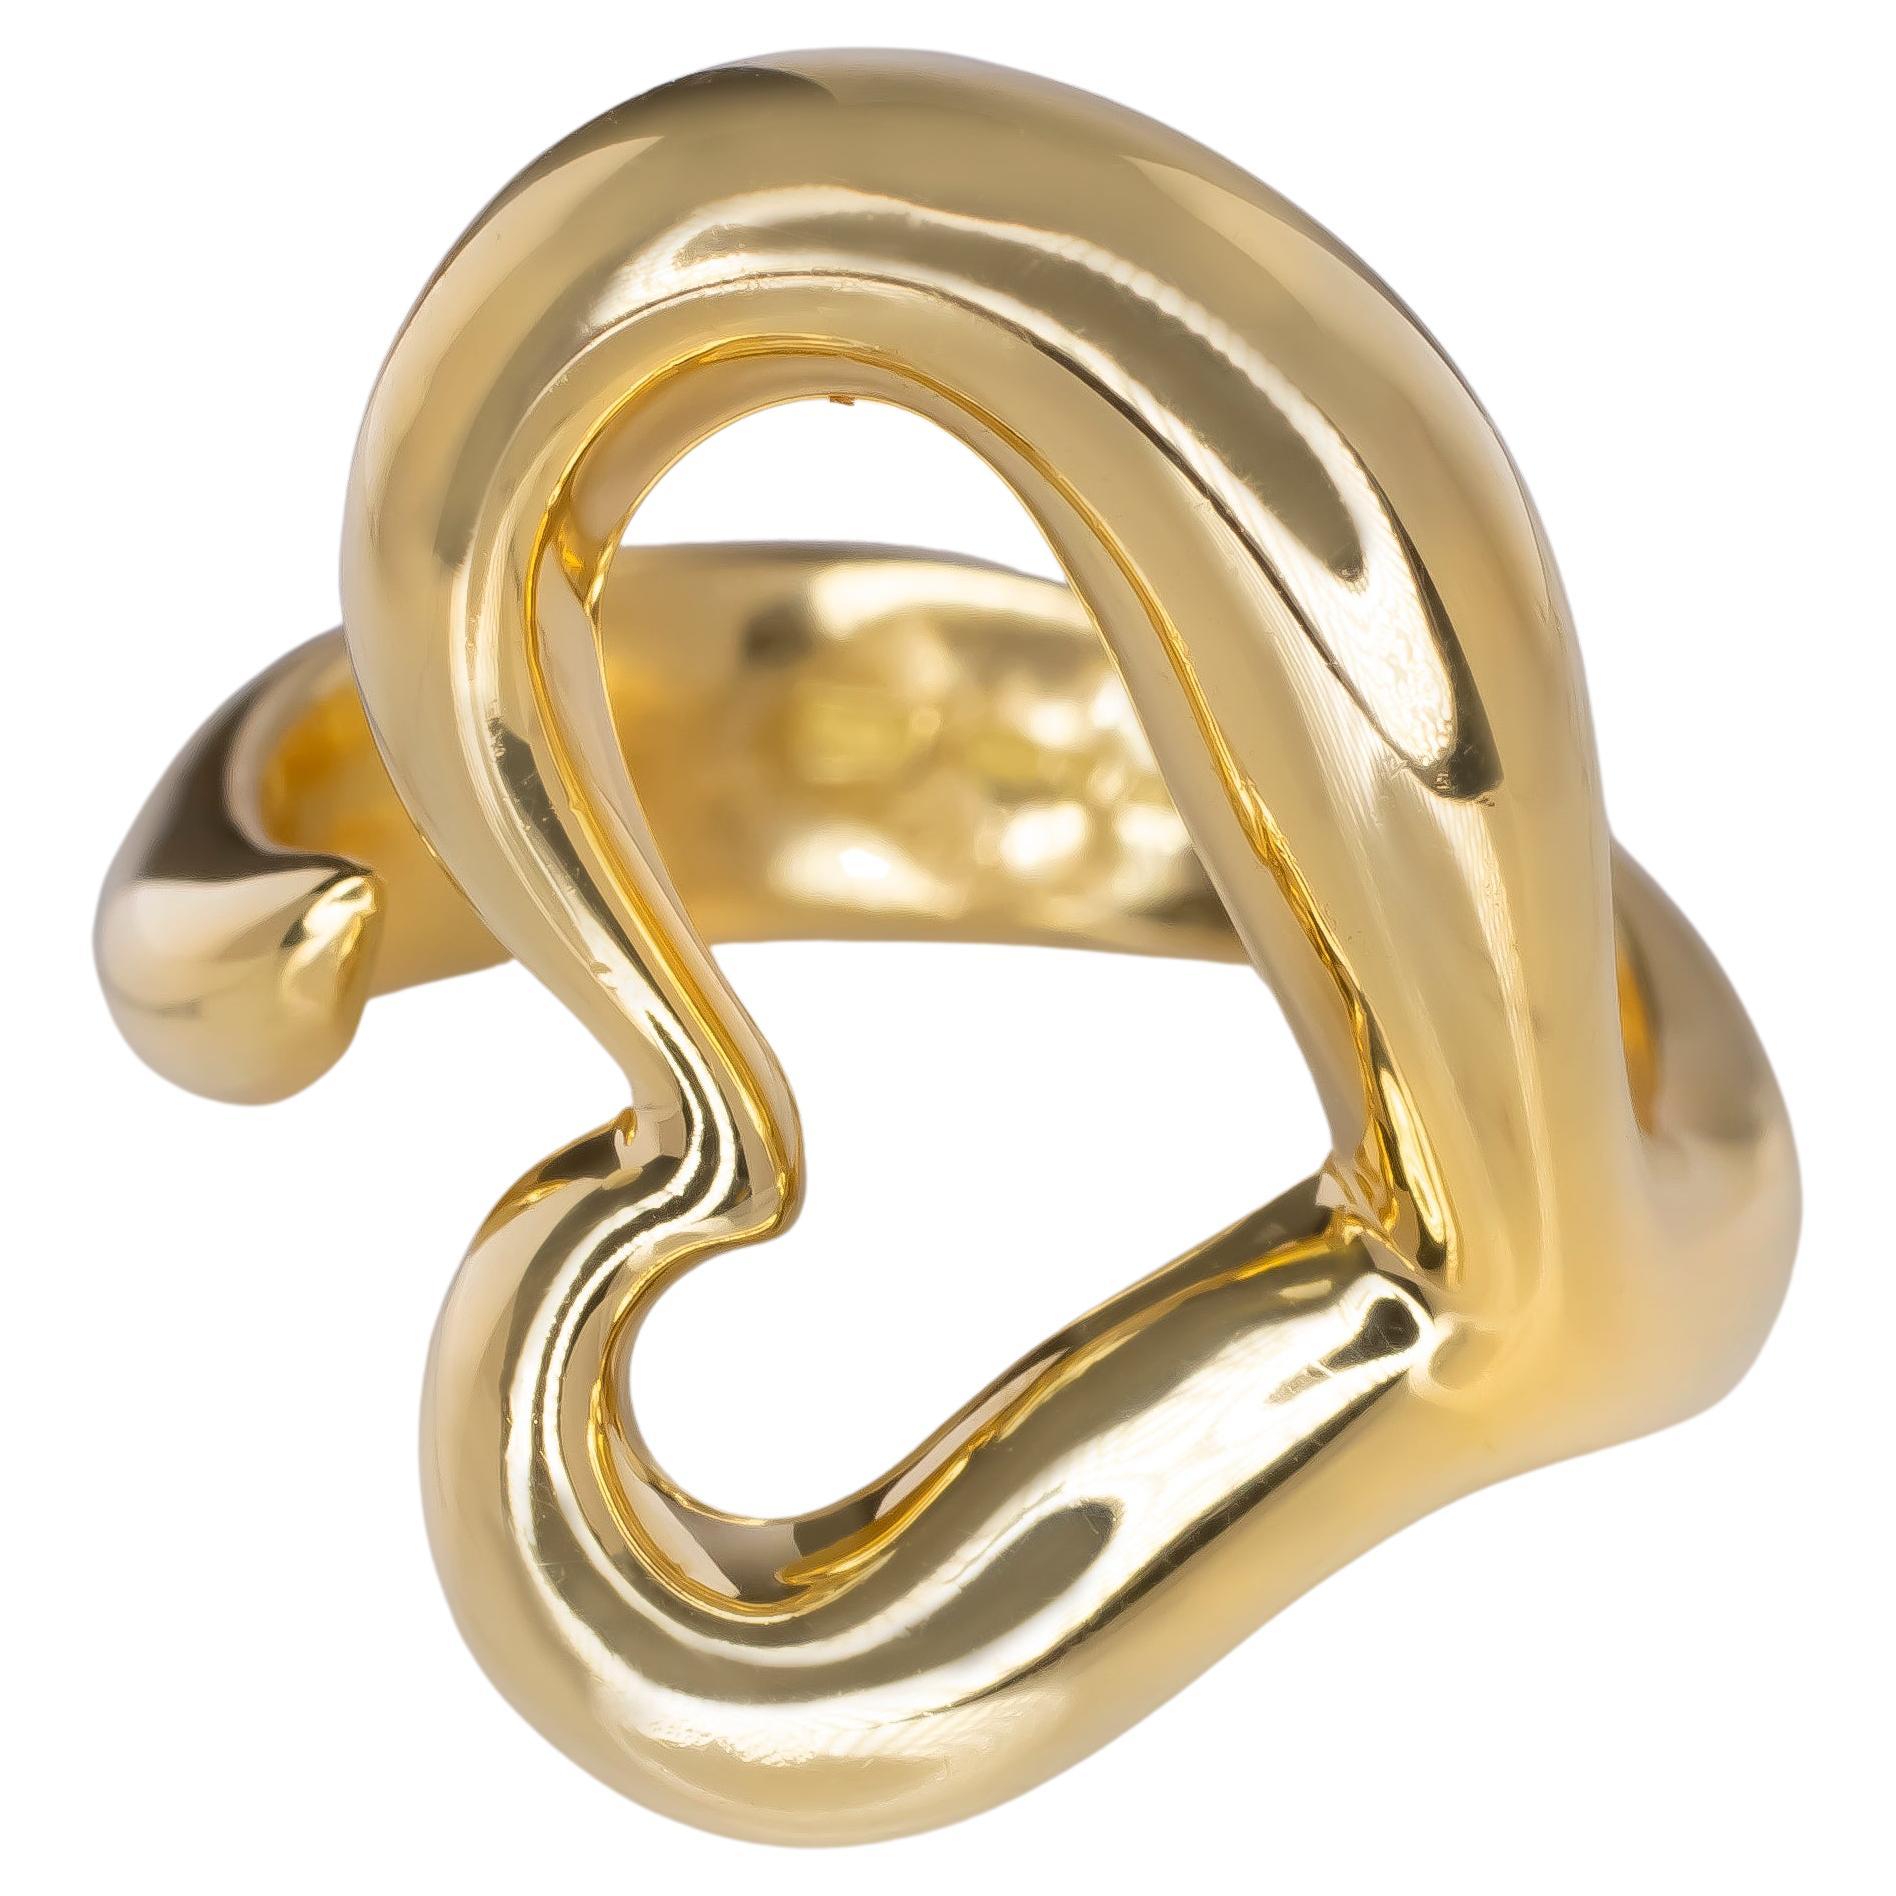 Tiffany & Co. Elsa Peretti Bague à cœur ouvert en or jaune massif 18 carats 10,70 grammes